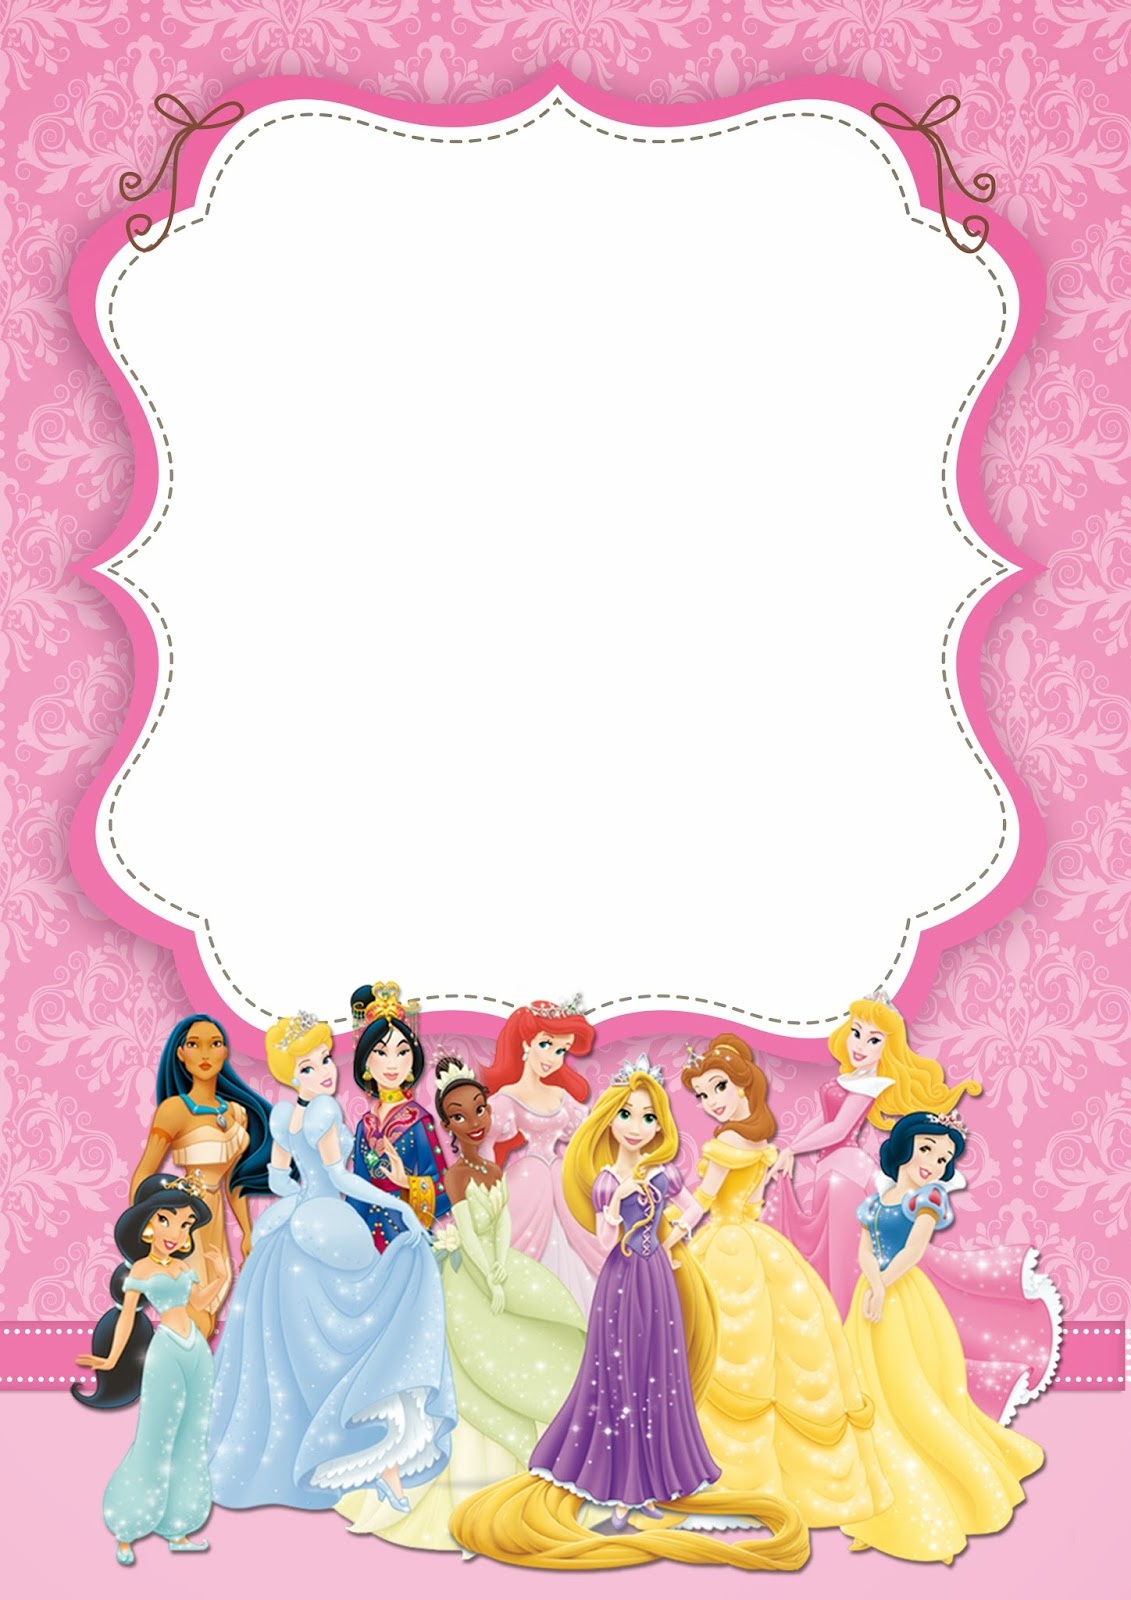 Disney Princess Party: Free Printable Party Invitations. - Oh My - Free Princess Printable Invitations